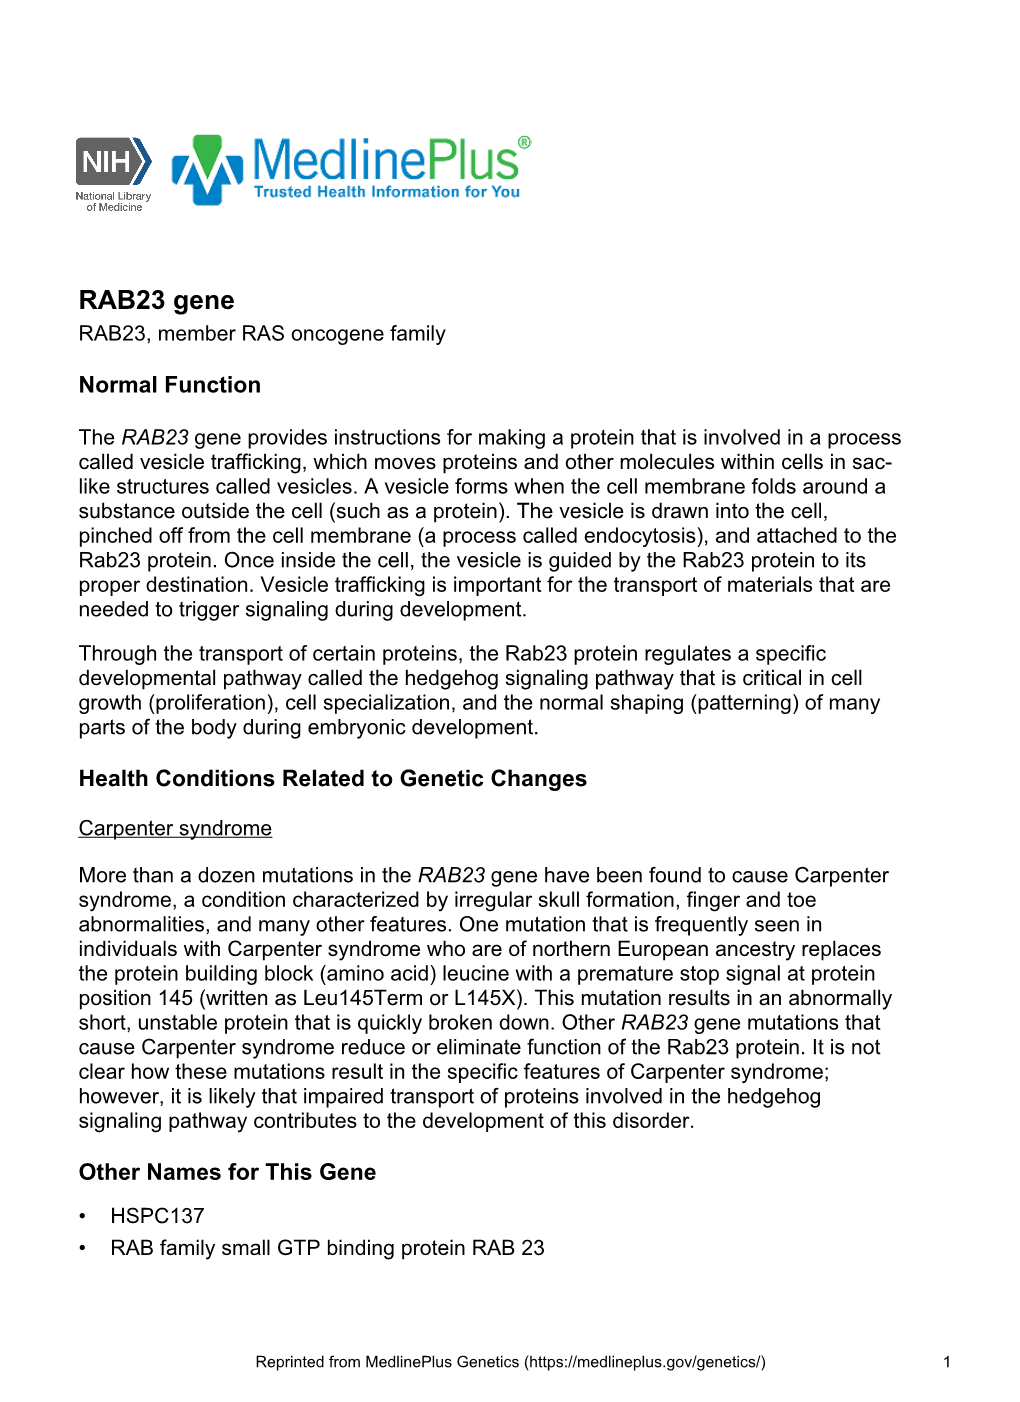 RAB23 Gene RAB23, Member RAS Oncogene Family